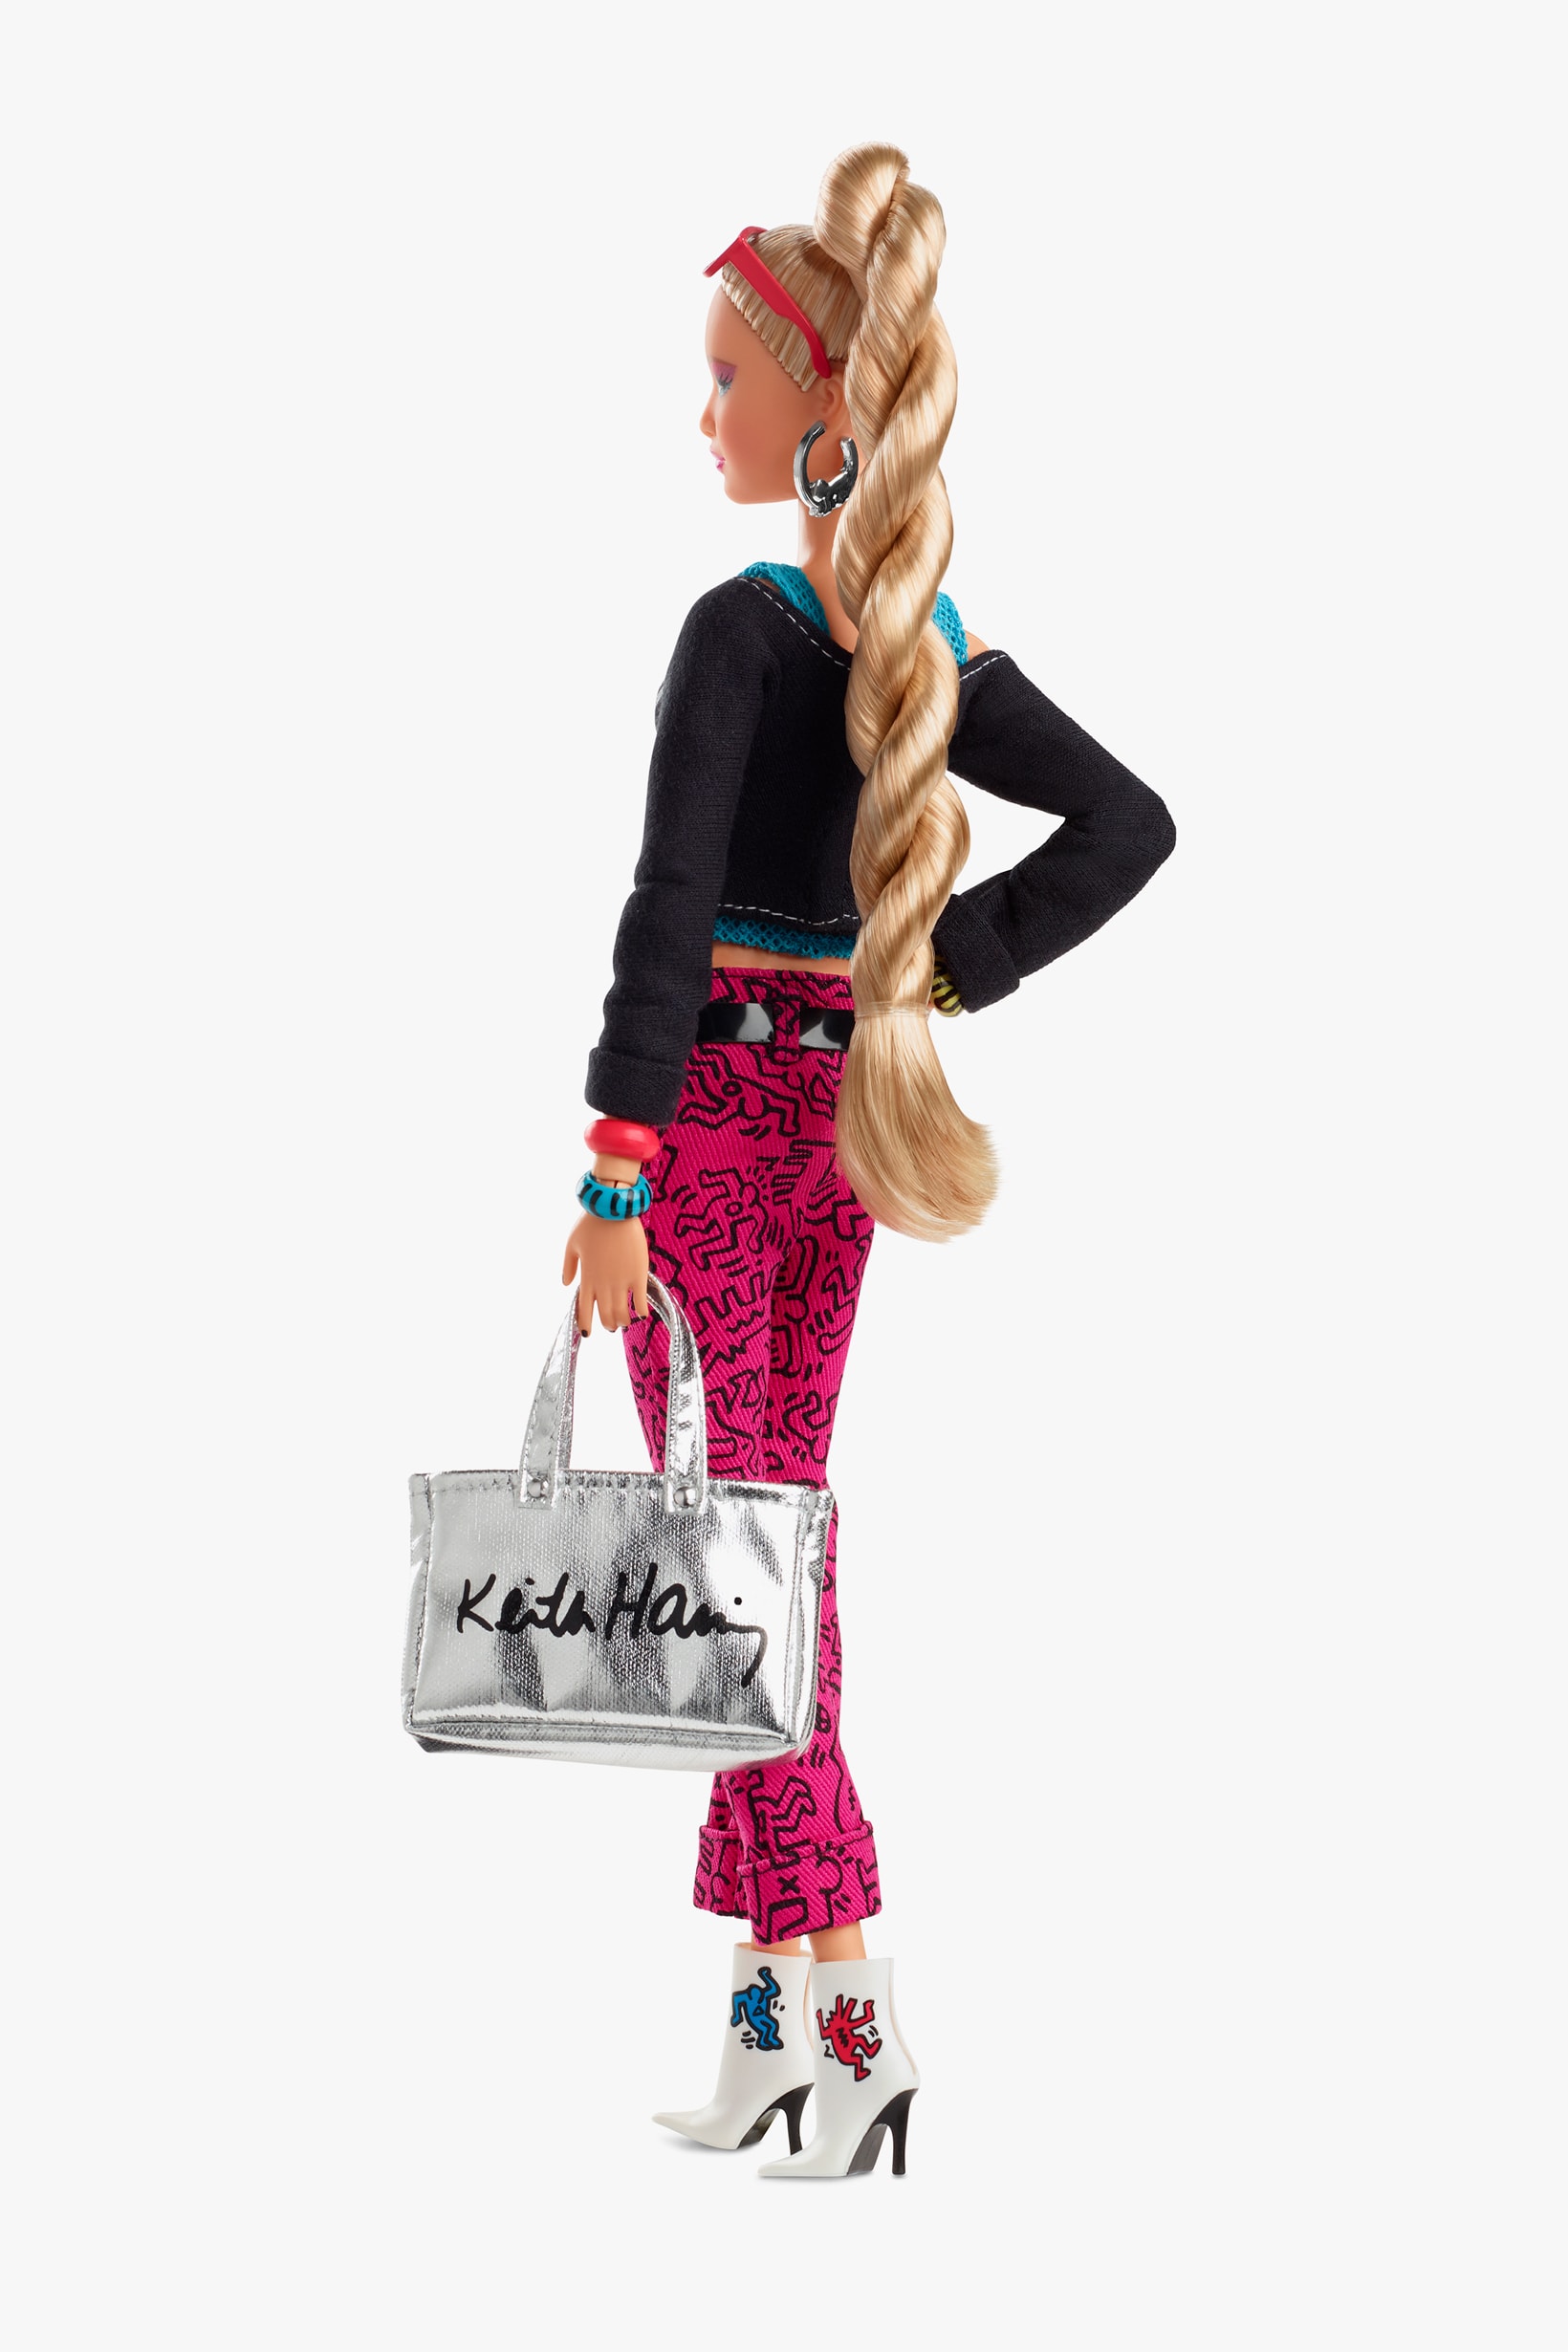 Keith Haring x Barbie Doll Top Black Pants Pink Bag Silver